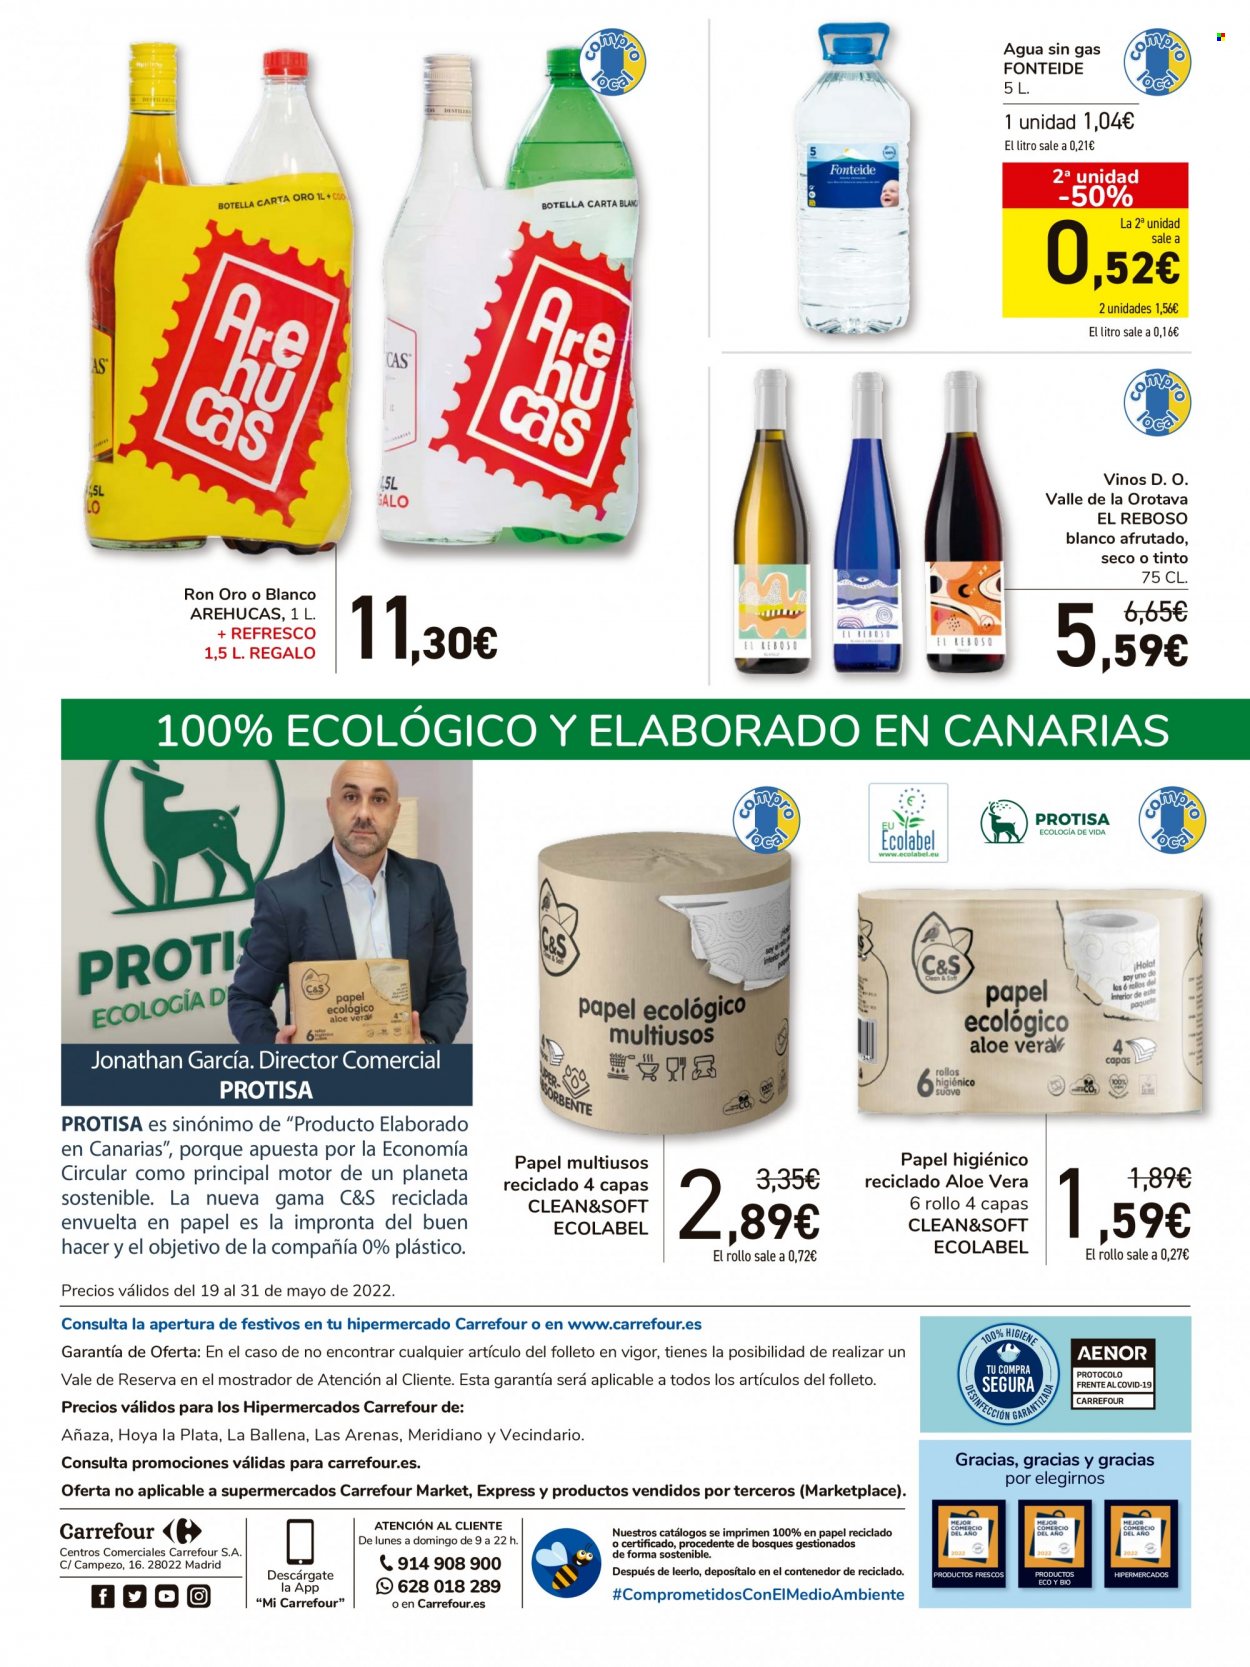 thumbnail - Folleto actual Carrefour - 19/05/22 - 31/05/22 - Ventas - refresco, agua, agua natural, ron, papel higienico. Página 8.